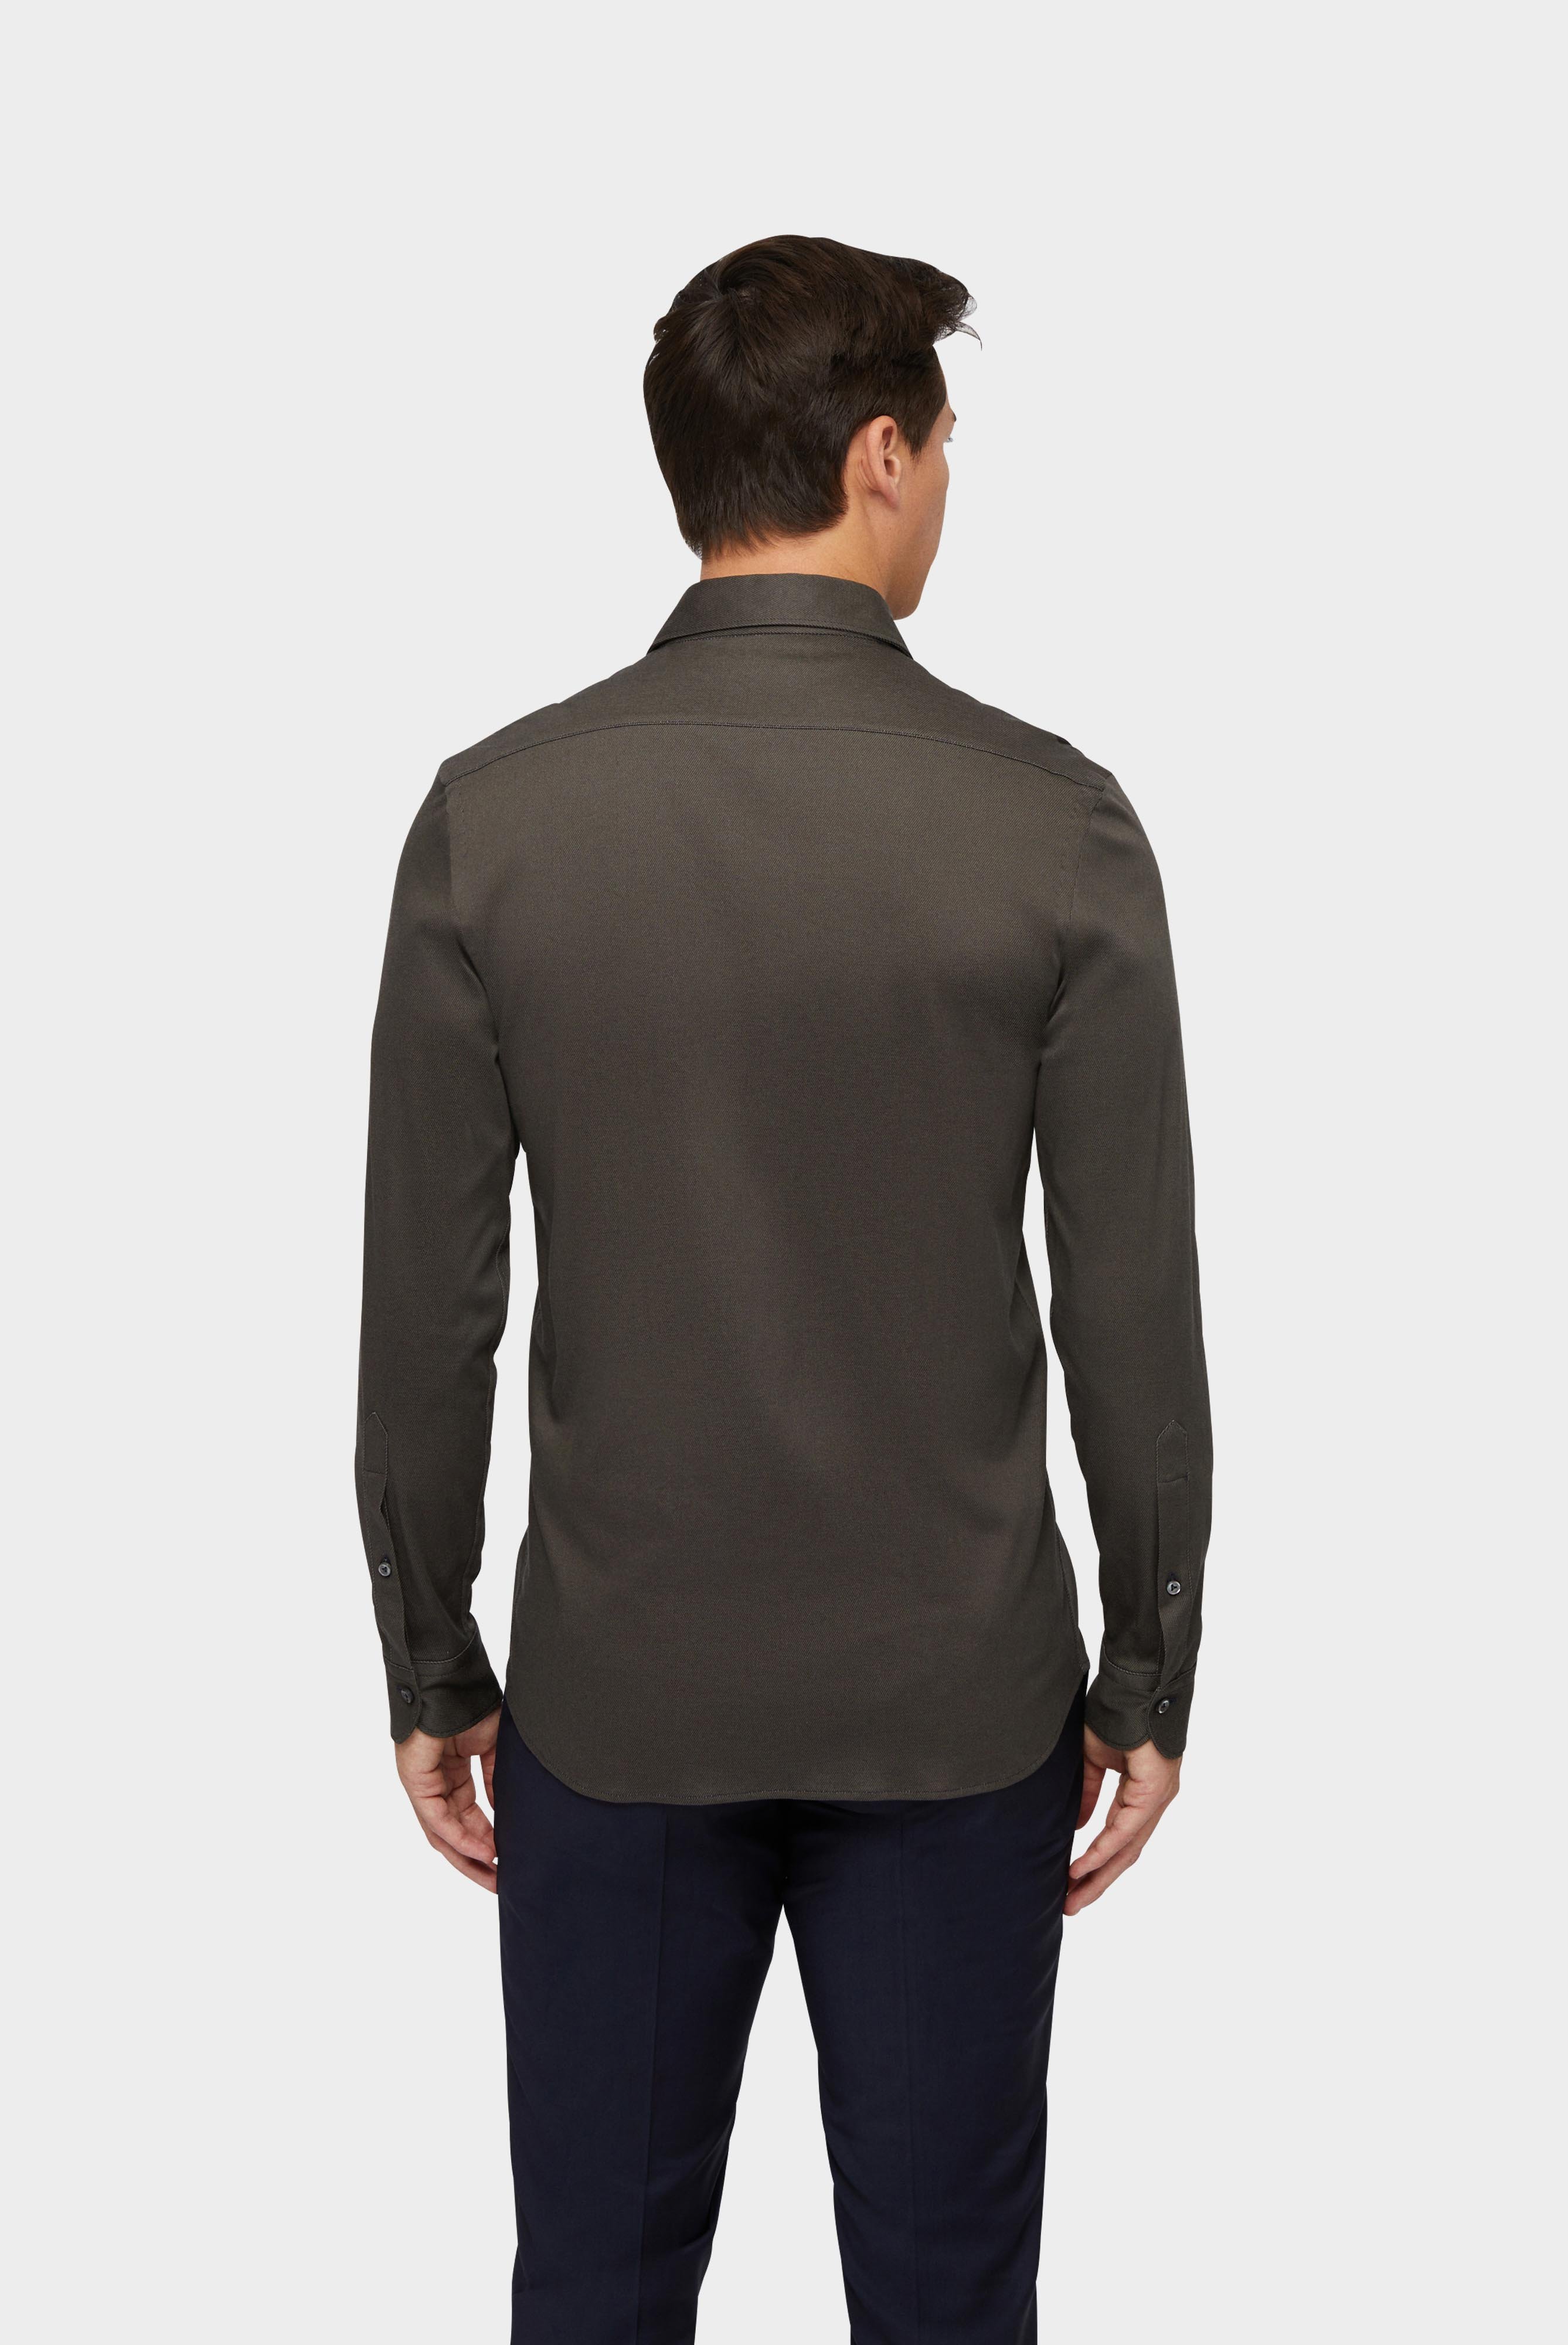 Casual Hemden+Jersey Hemd mit Twill Druck Tailor Fit+20.1683.UC.187749.970.M